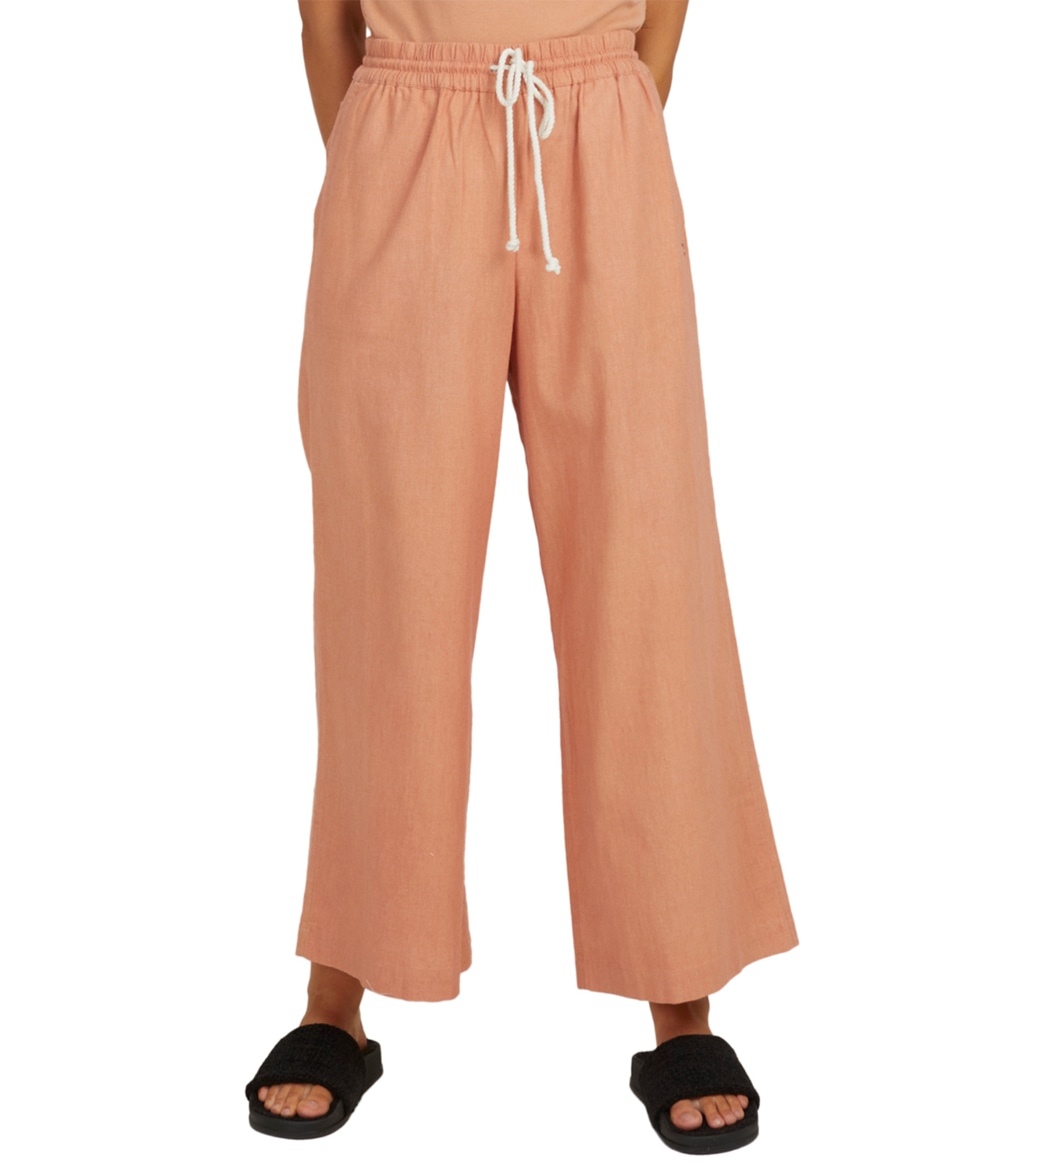 Roxy Women's Lekeitio Beach Pants - Baked Clay Large Cotton - Swimoutlet.com